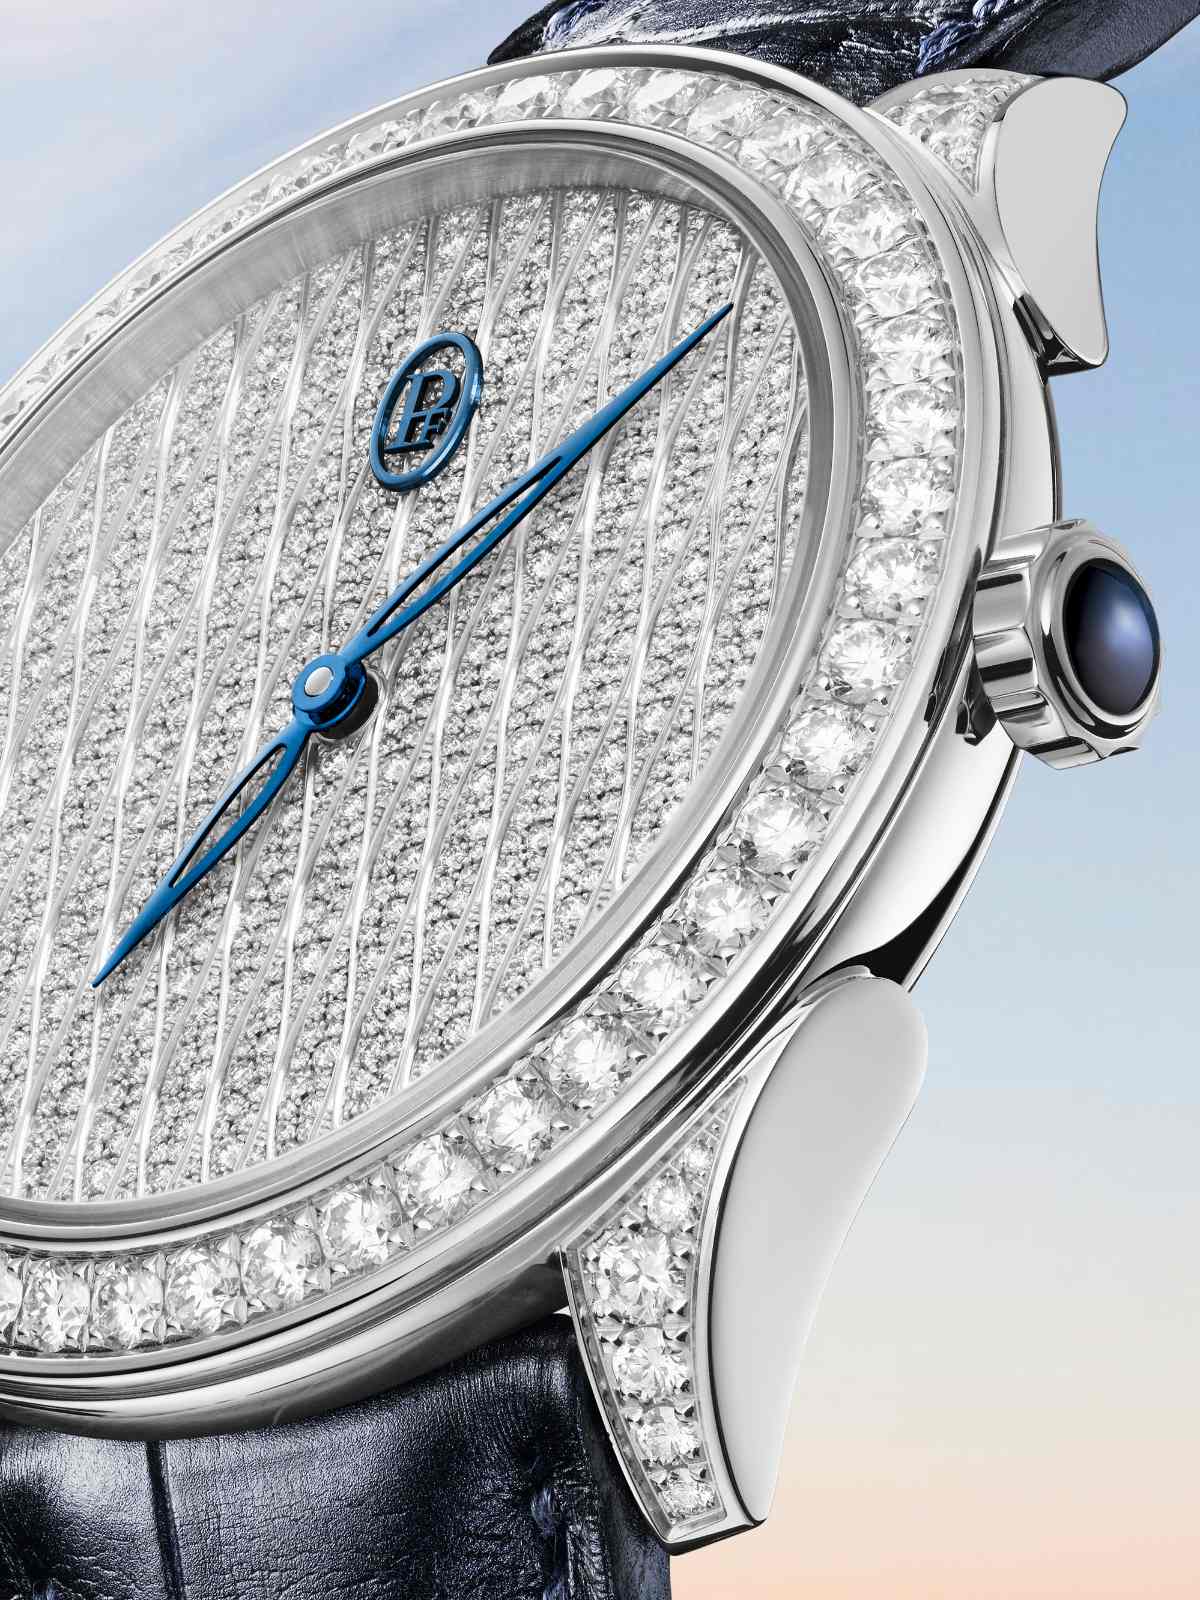 Parmigiani Fleurier Presents Its New Tonda Automatic Watch: Designed With Diamonds